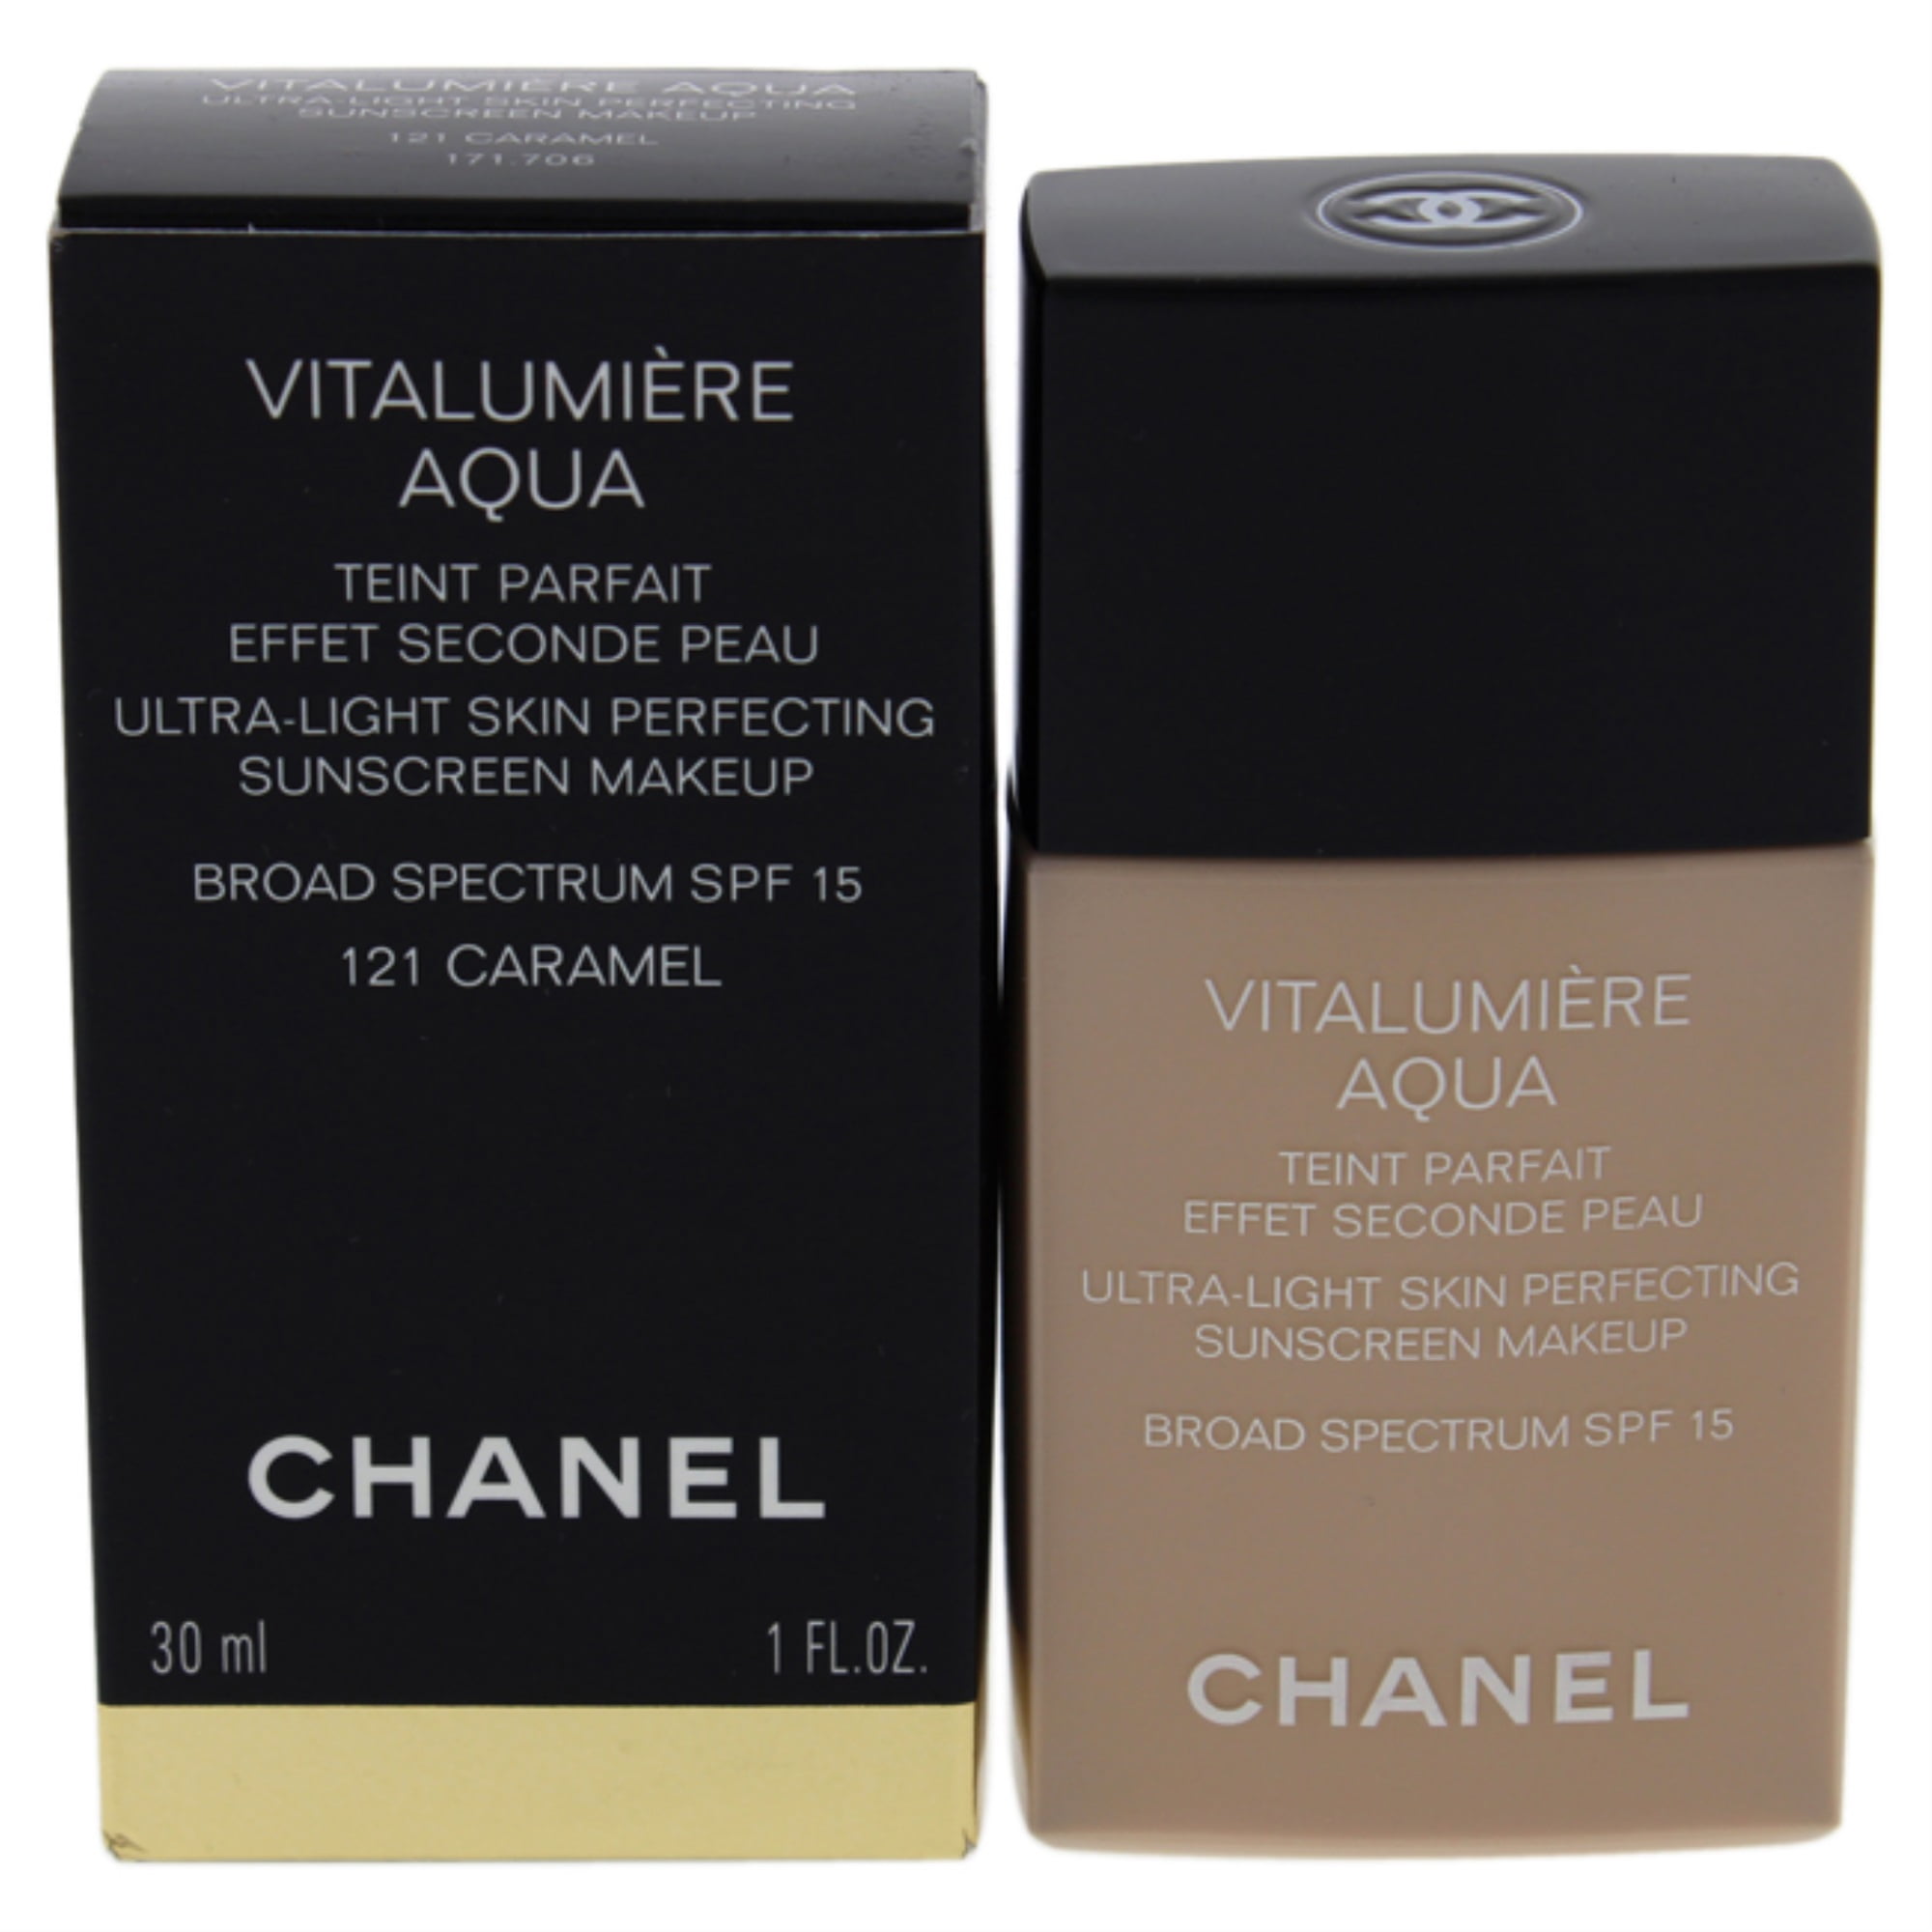 Chanel Vitalumiere Aqua Ultra-Light Skin Perfecting Makeup, SPF 15, Beige 50 - 1 oz bottle